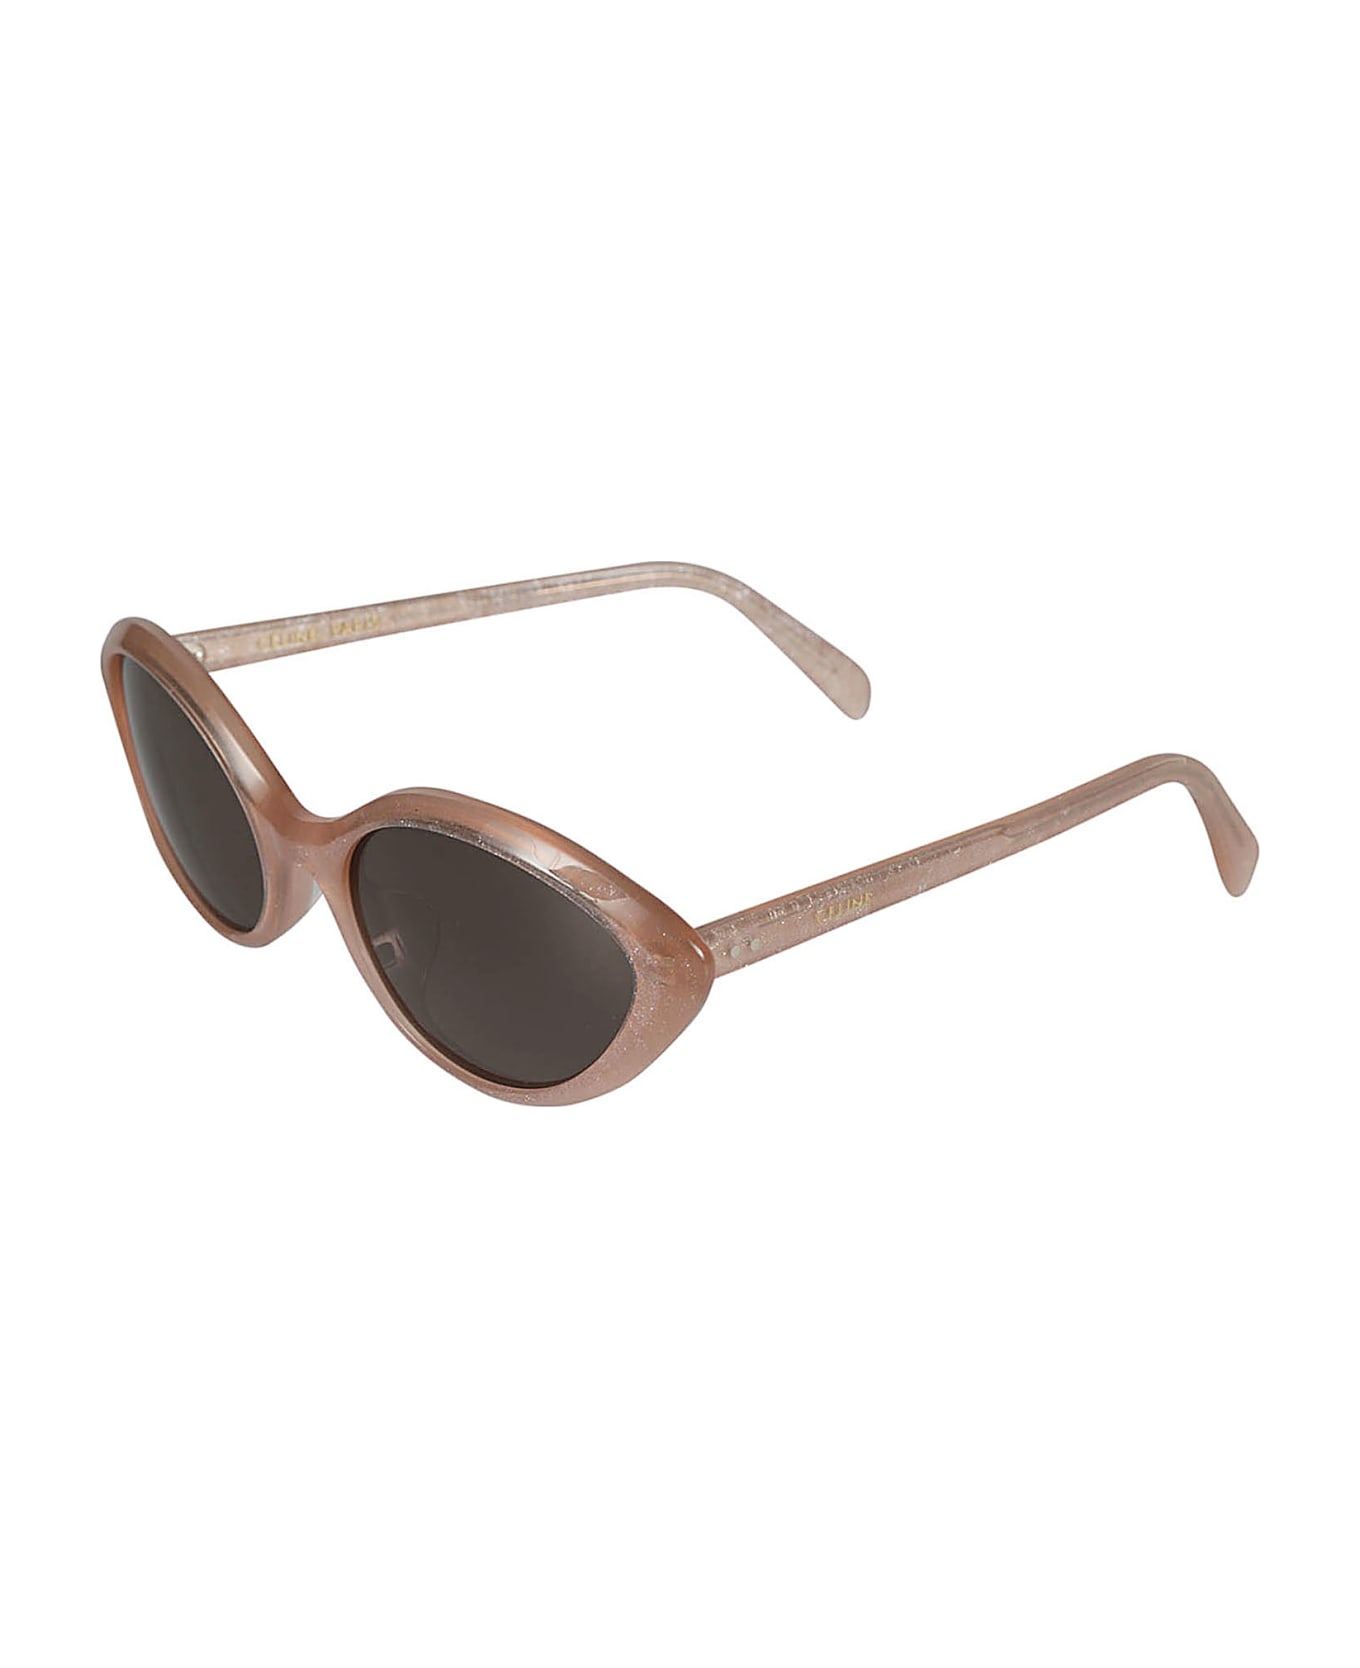 Celine Embellished Cat-eye Sunglasses - 74n サングラス